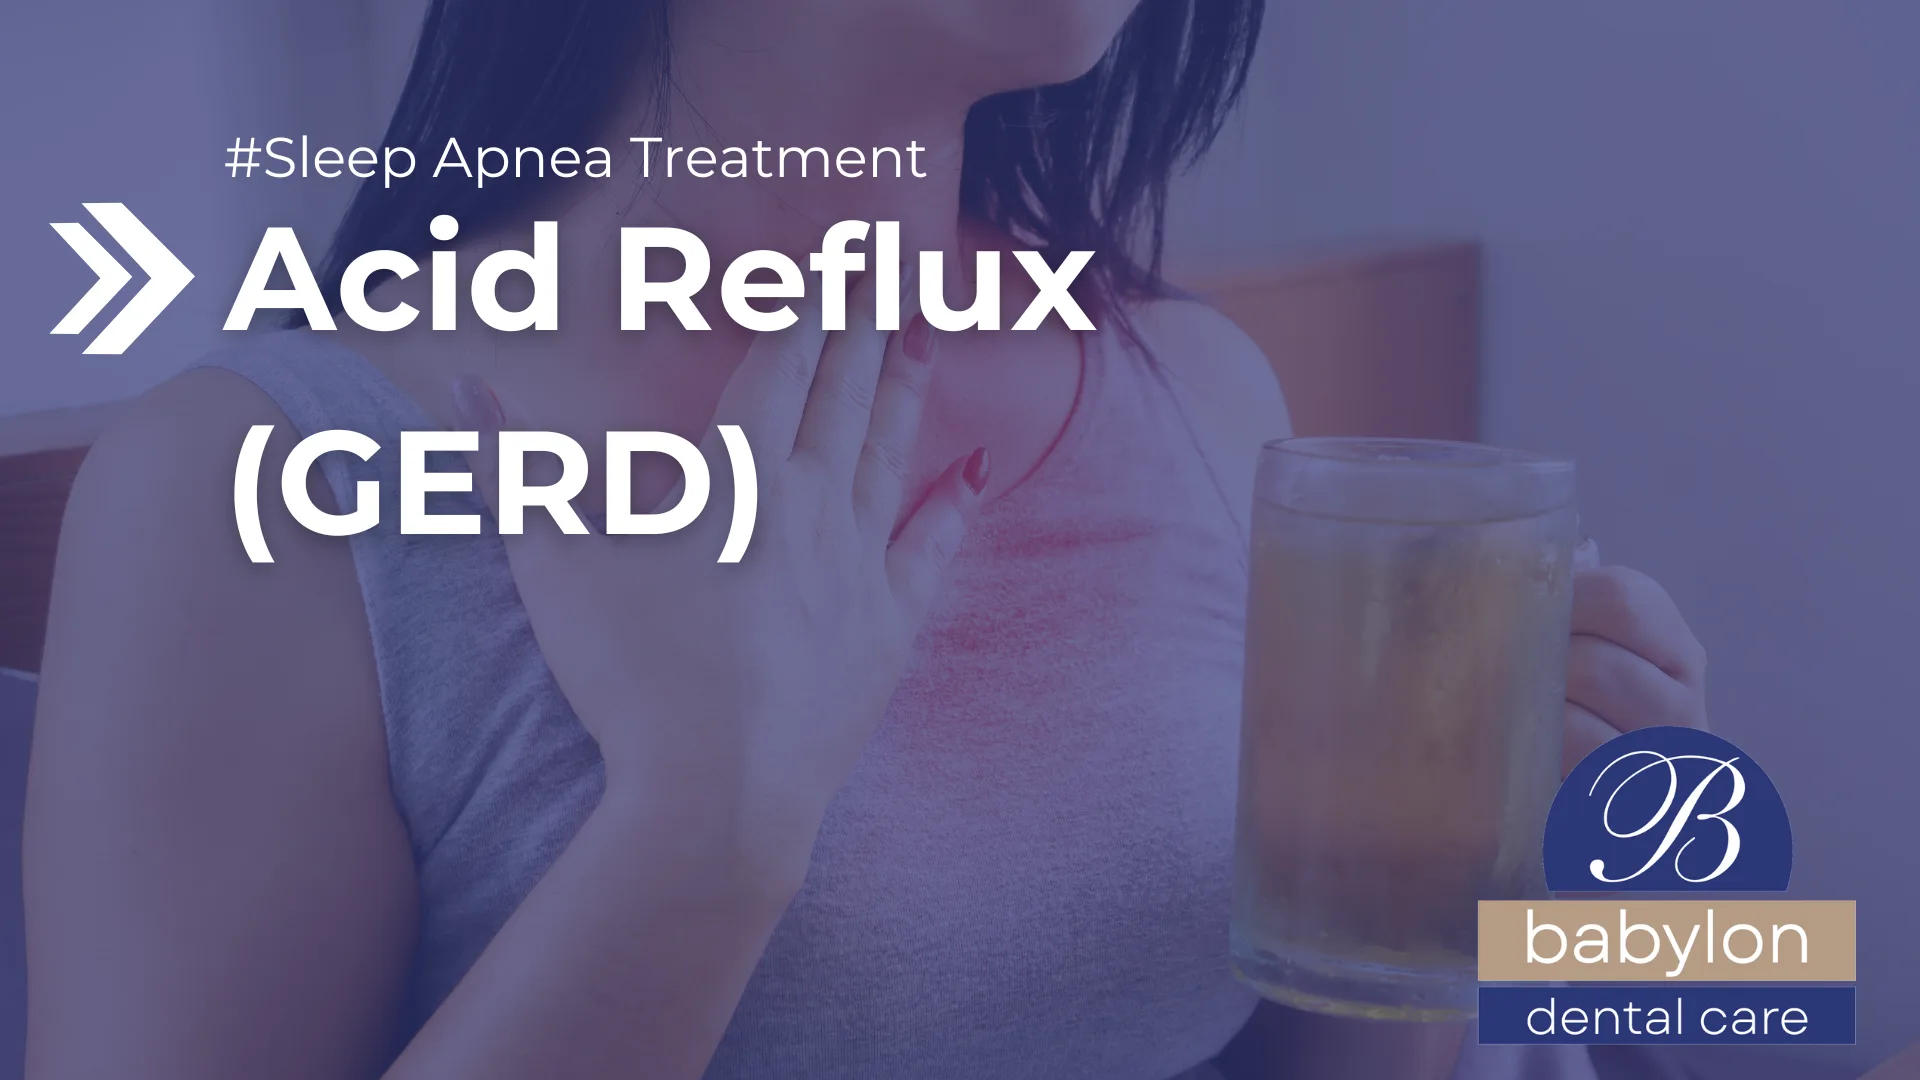 Acid Reflux (GERD) Image - new logo